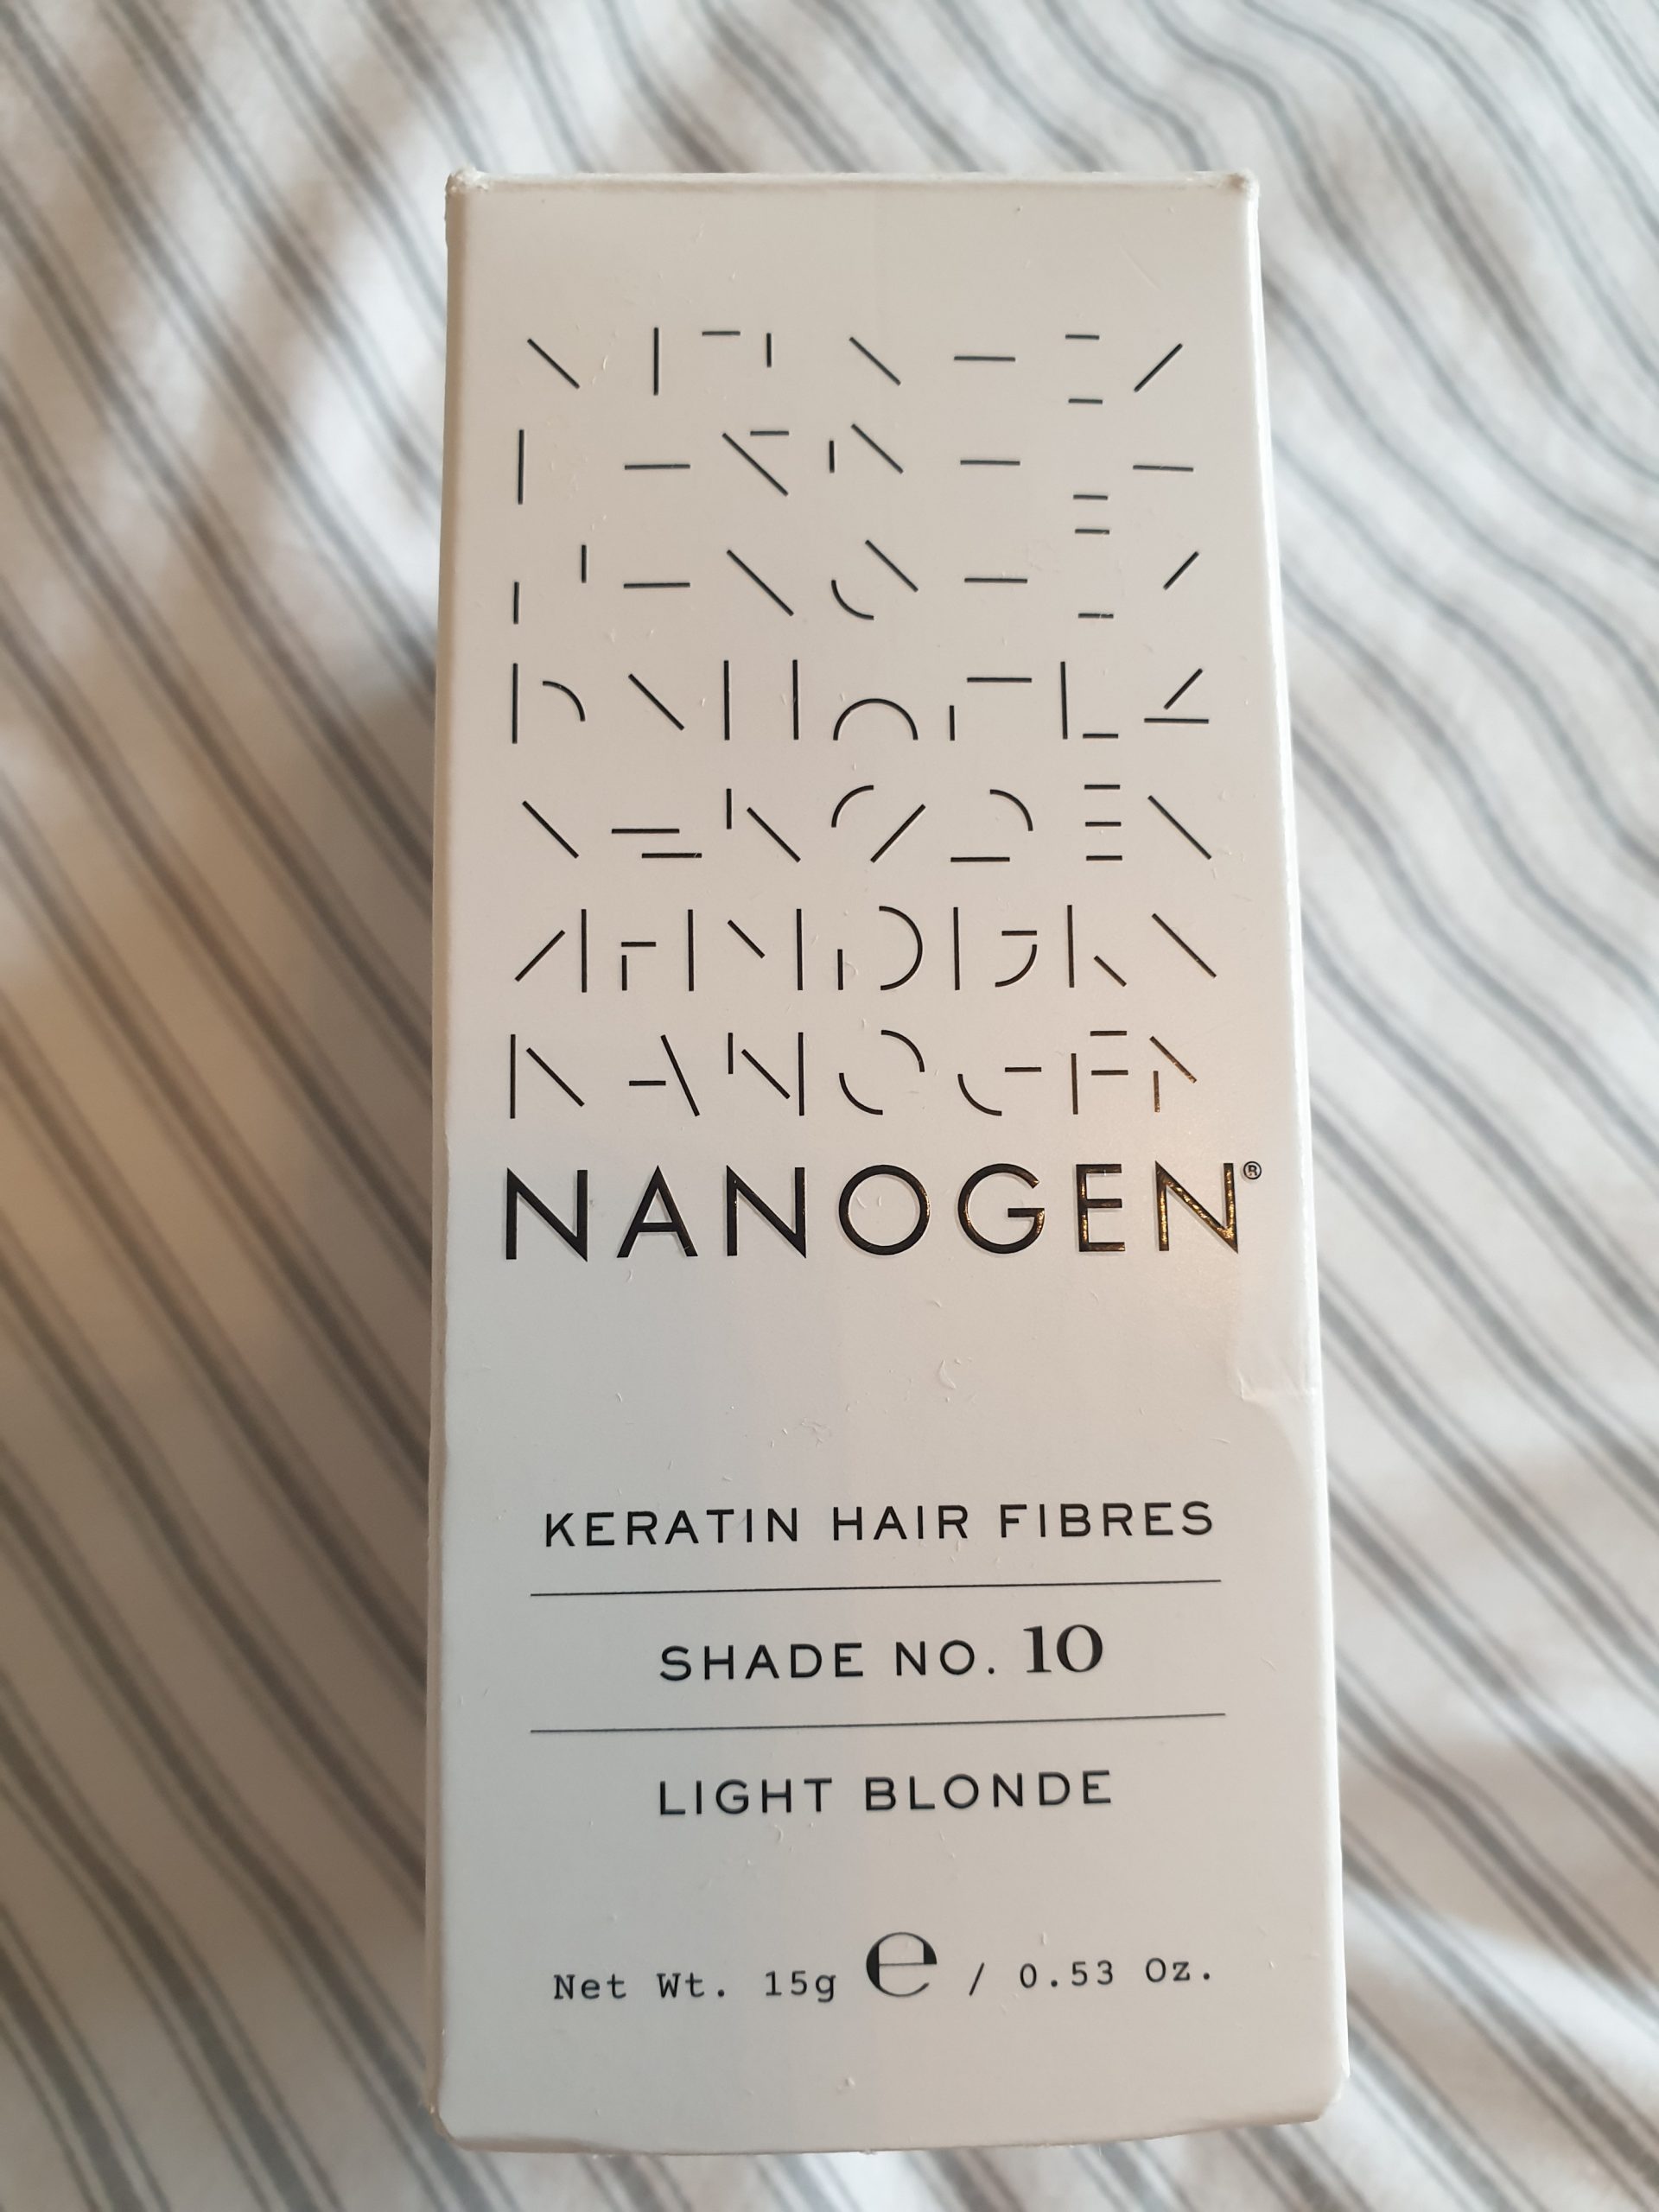 Nanogen Keratin Hair Fibres Review – What's Good To Do